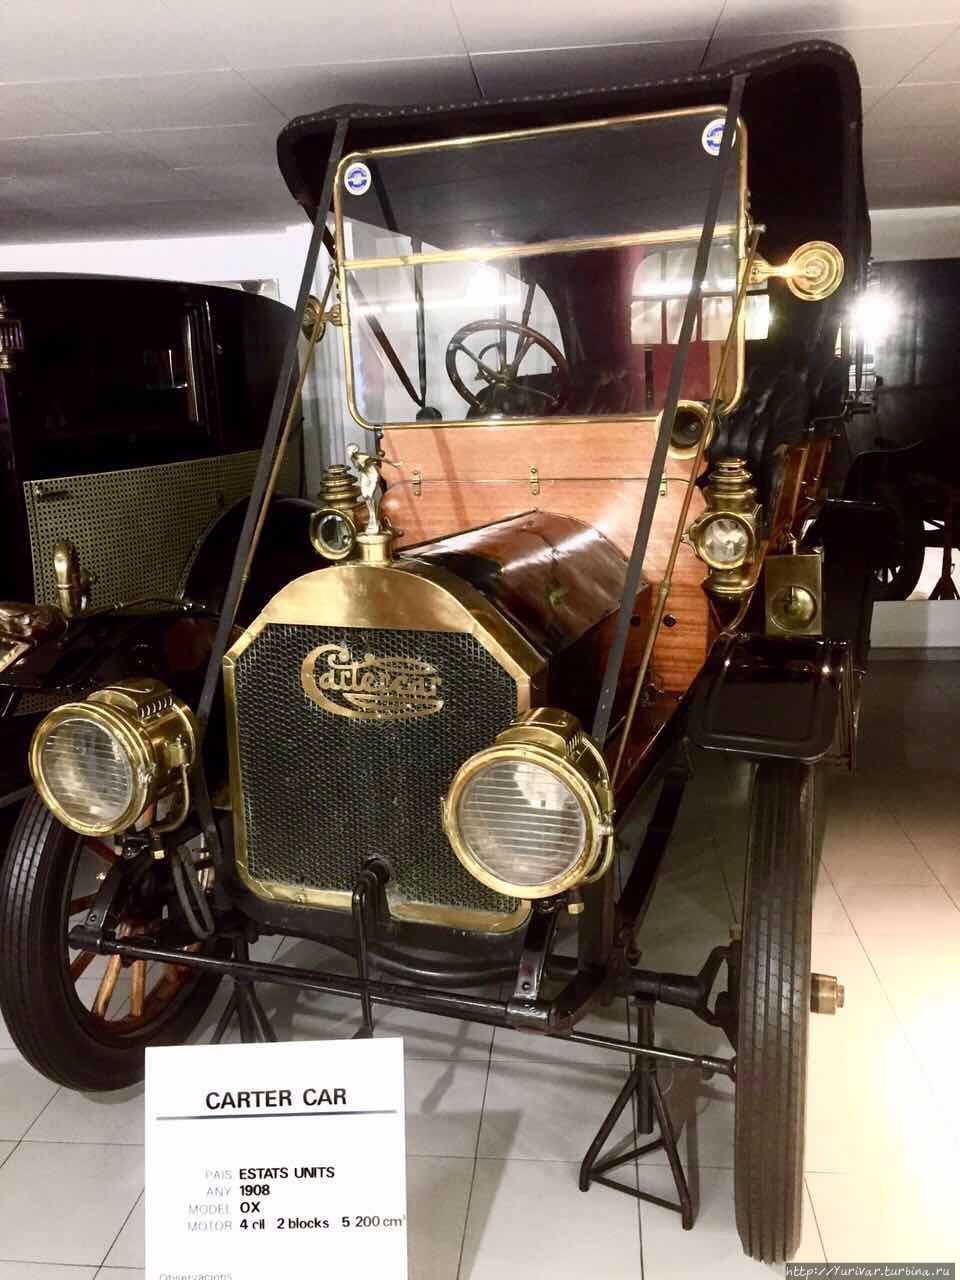 Автомобиль Carter ( США) 1908 г. Энкамп, Андорра